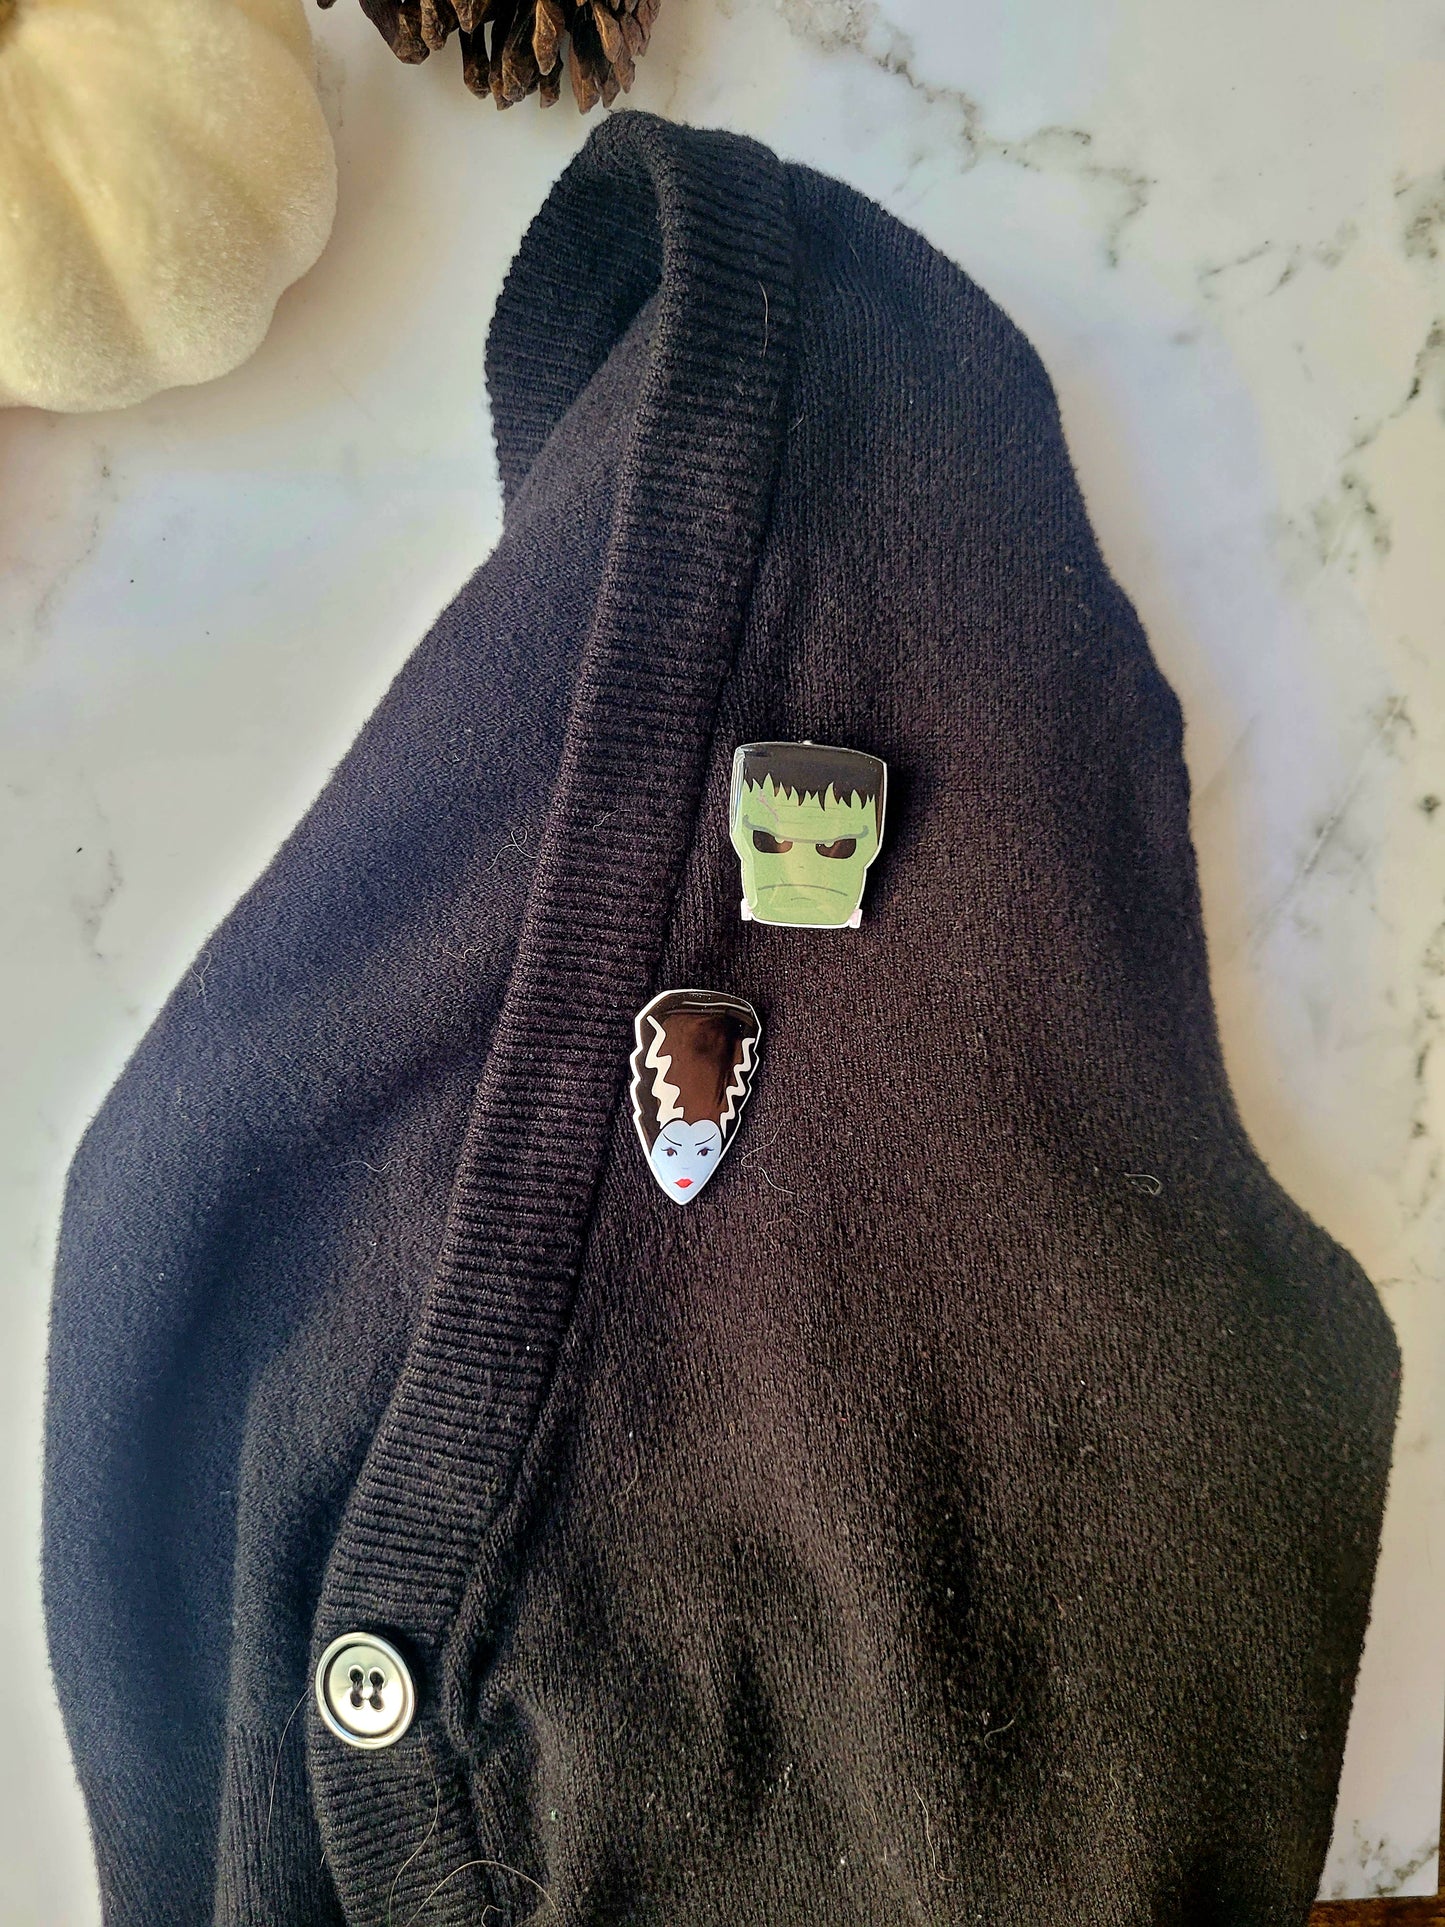 Frankenstein and Bride of Frankenstein monster pins on a black cardigan. 